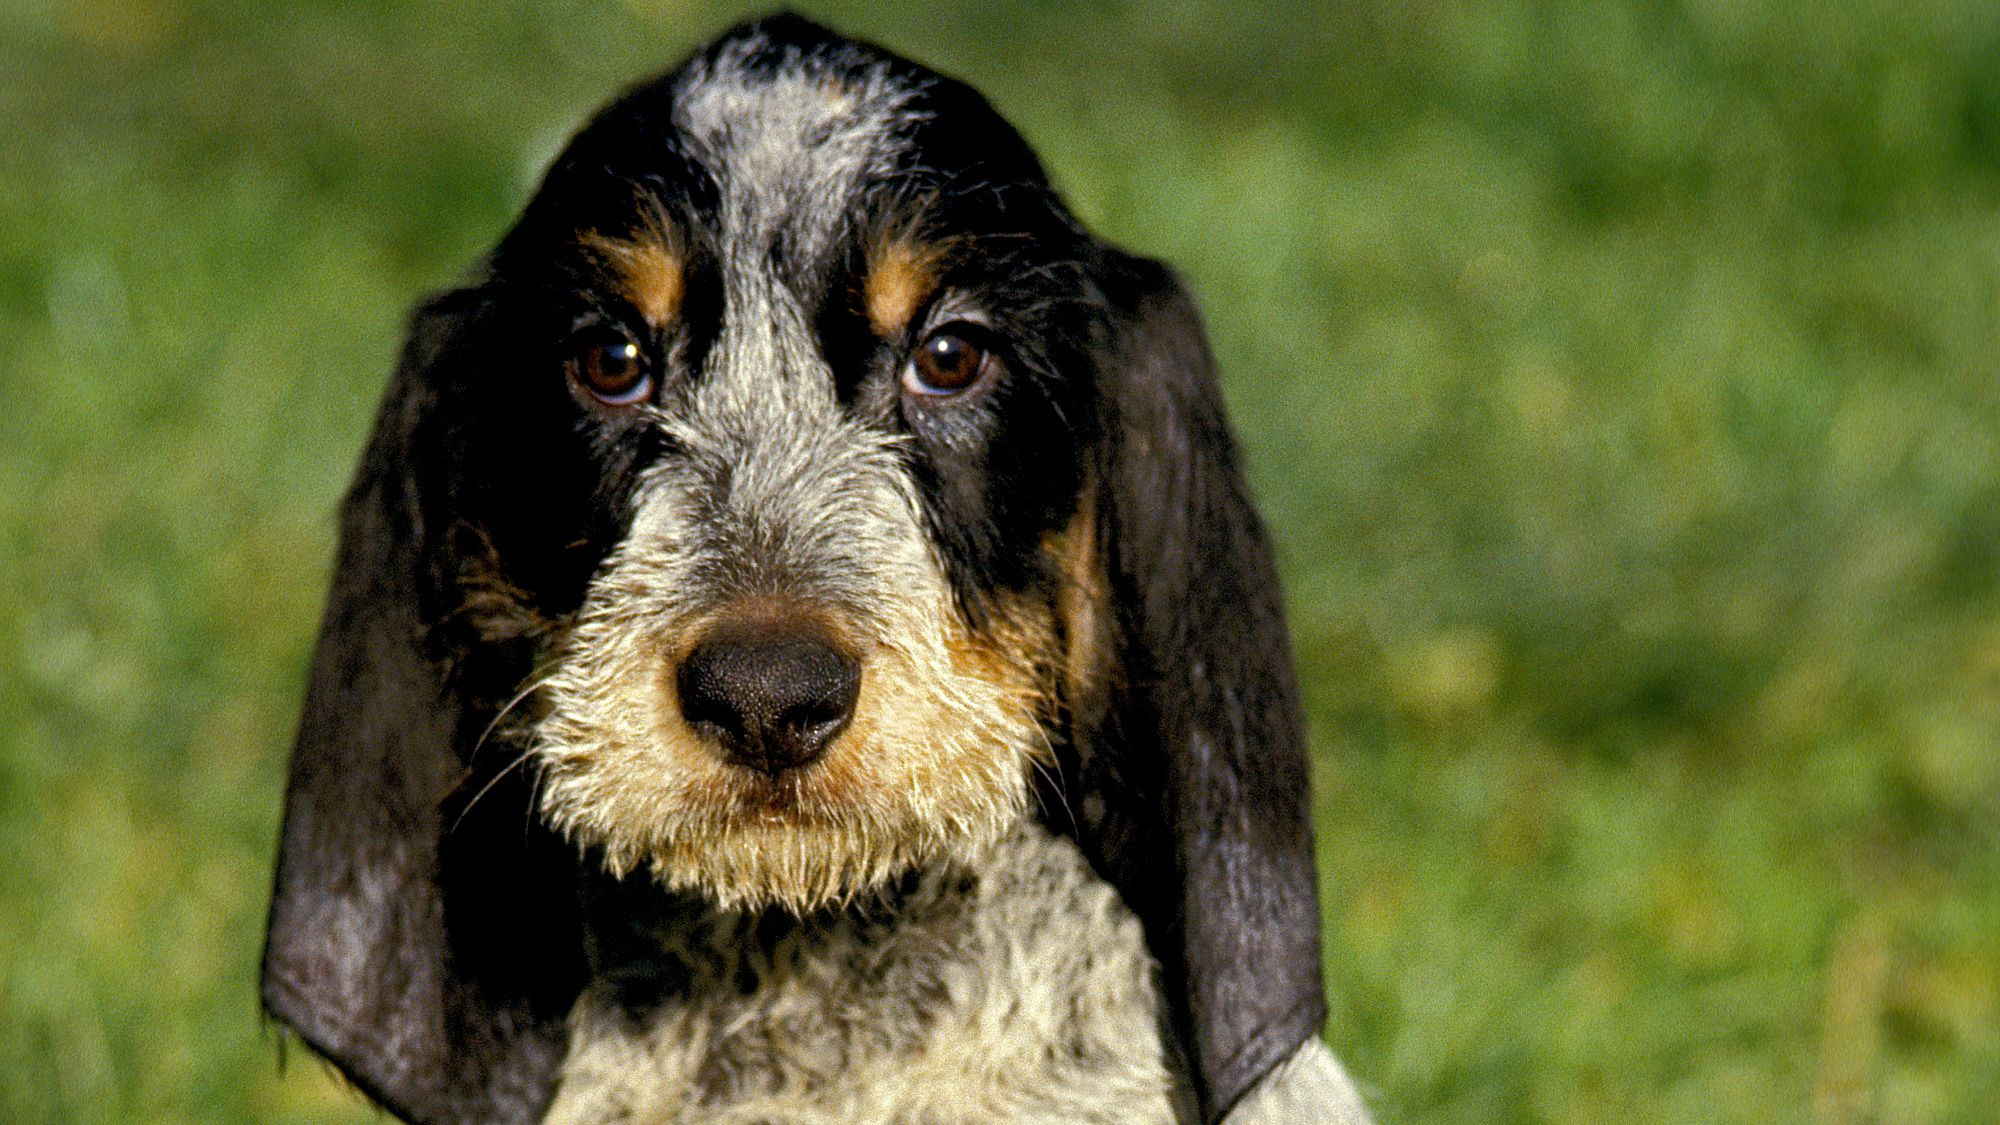 Close-up of a Griffon Bleu de Gascogne puppy